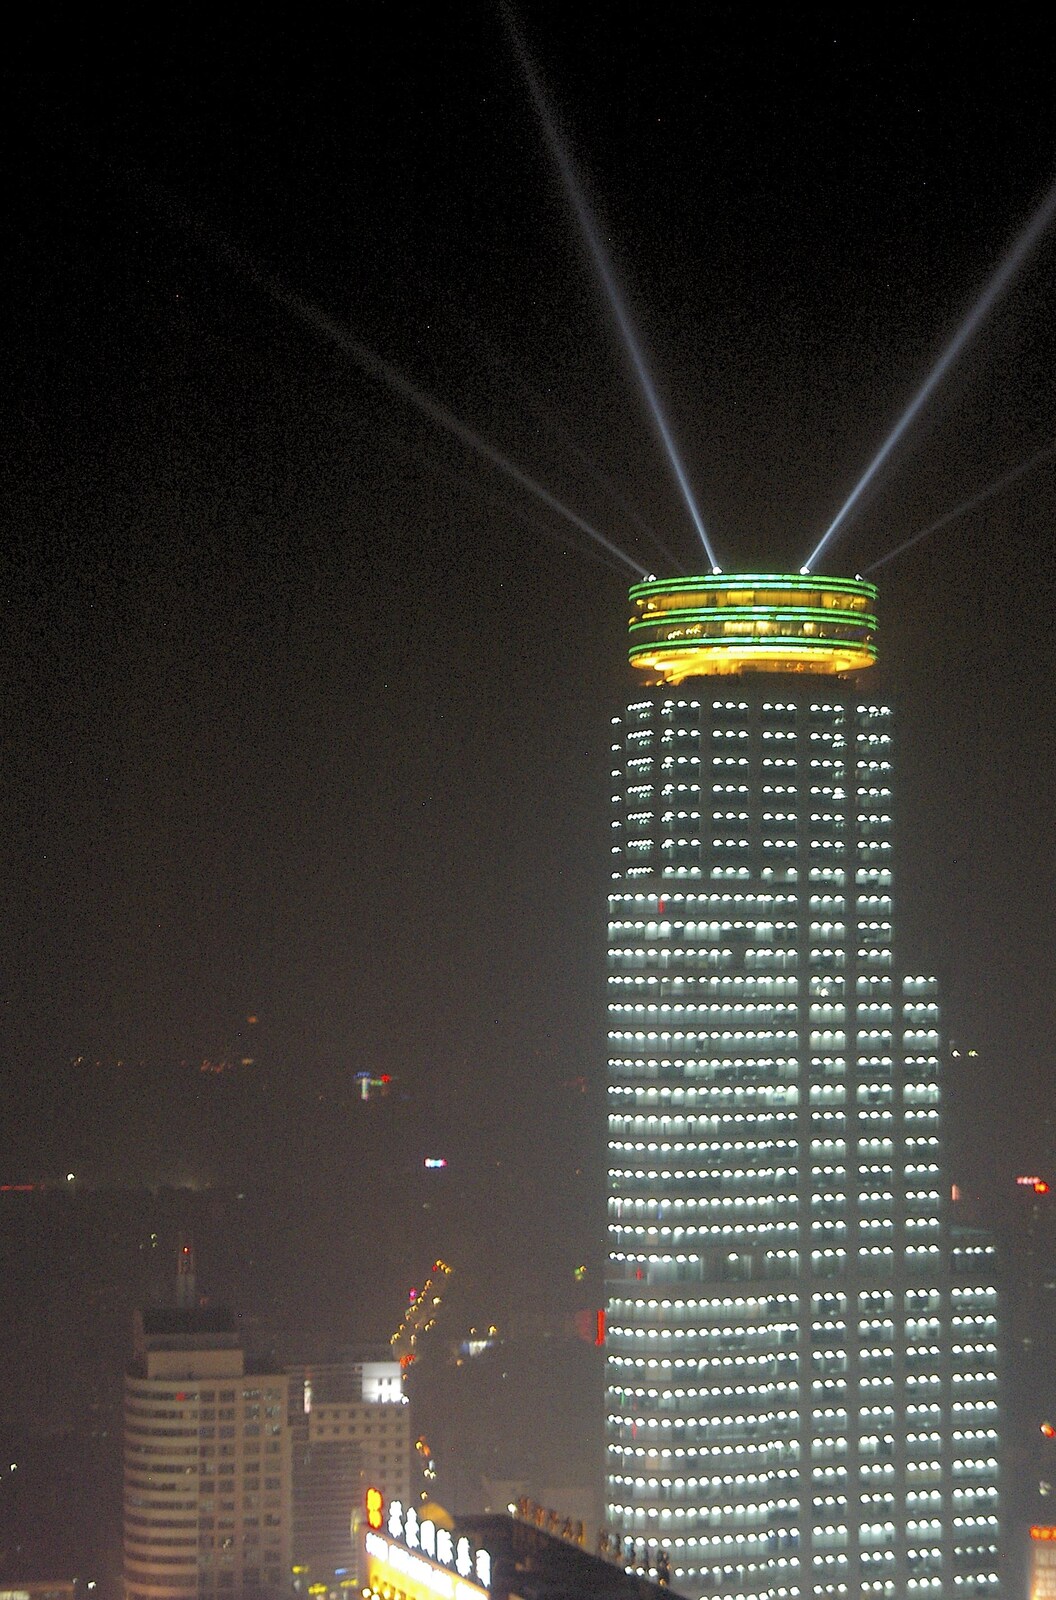 Searchlights on a building from Nanjing by Night, Nanjing, Jiangsu Province, China - 4th October 2006